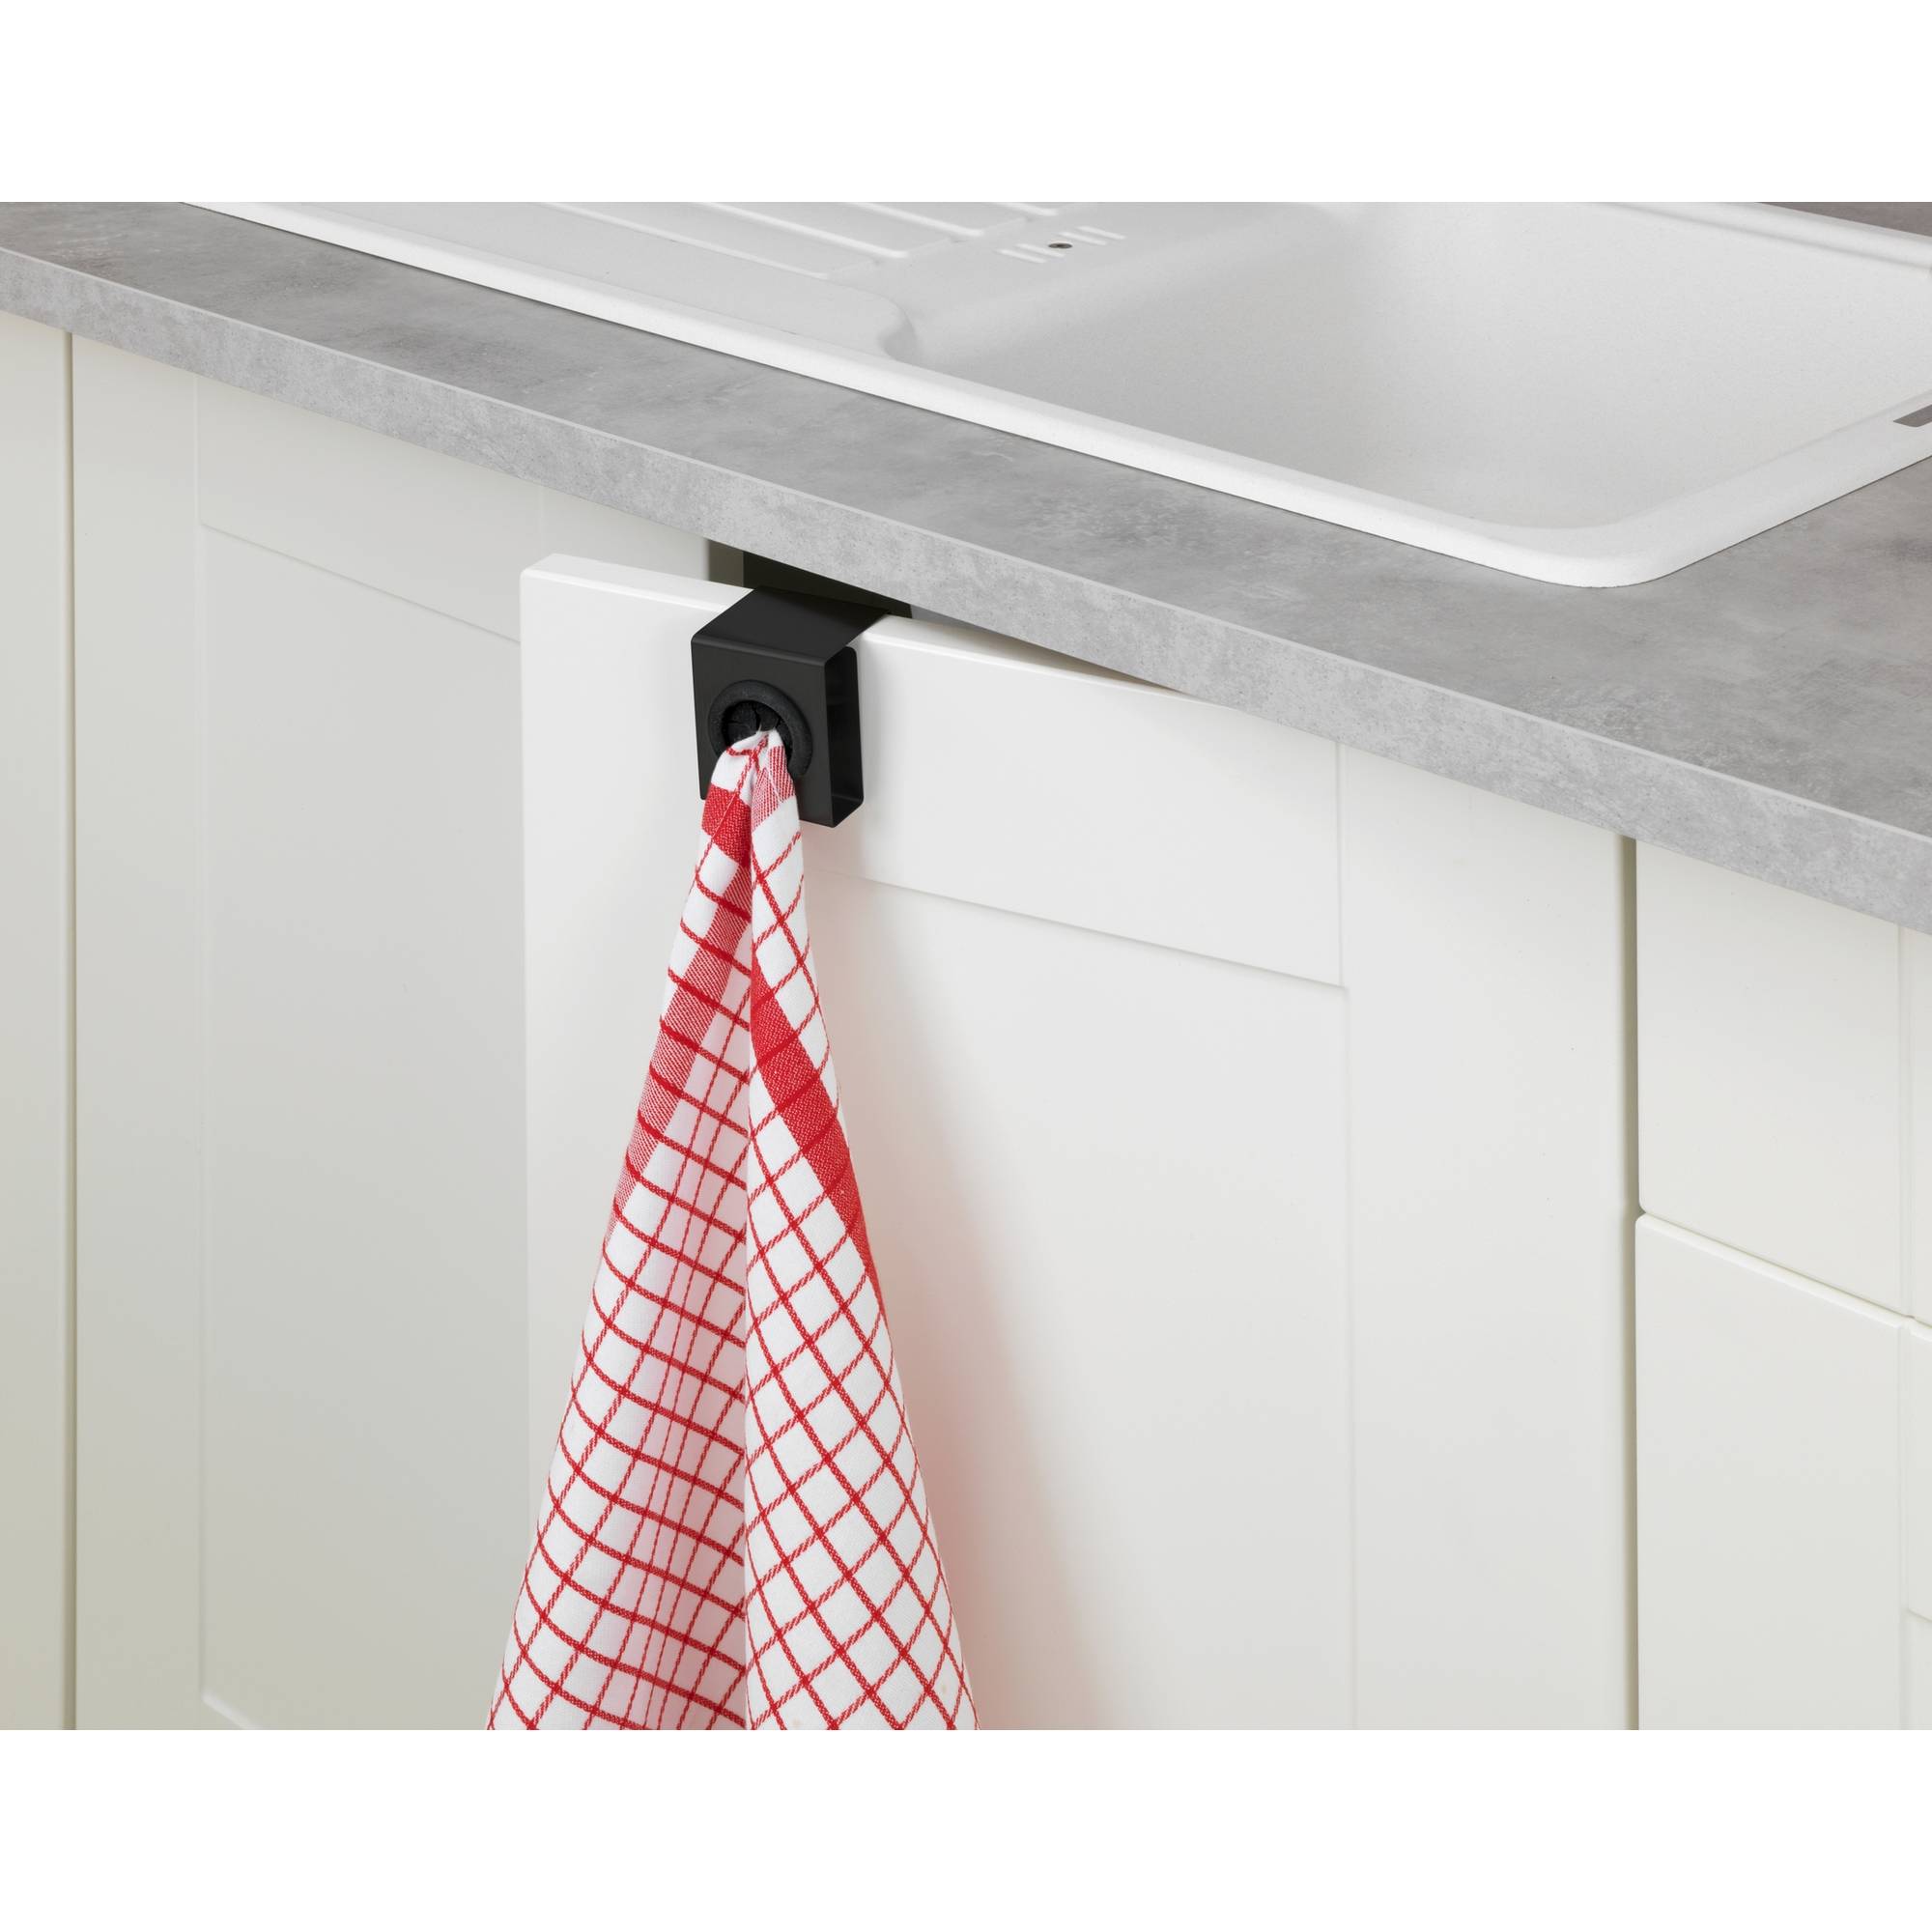 Küchenhaken 'Push' matt schwarz Edelstahl 5 x 6 x 4 cm + product picture